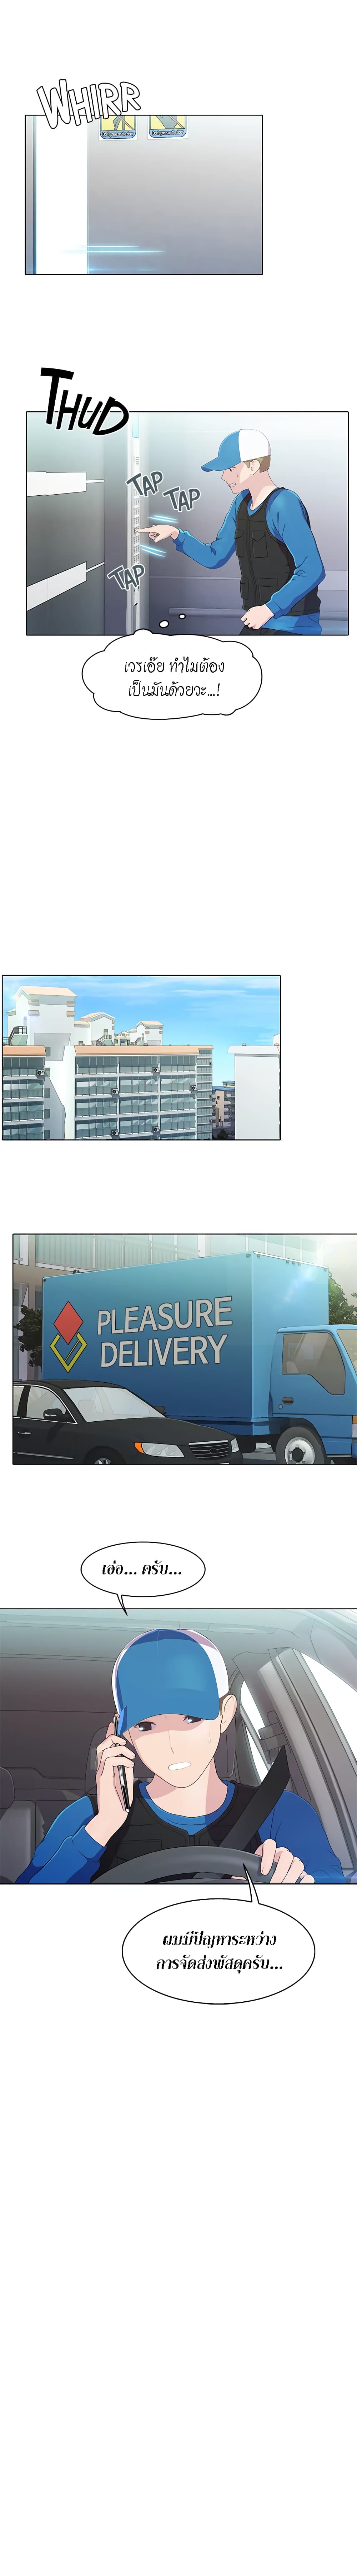 Pleasure Delivery 1 11